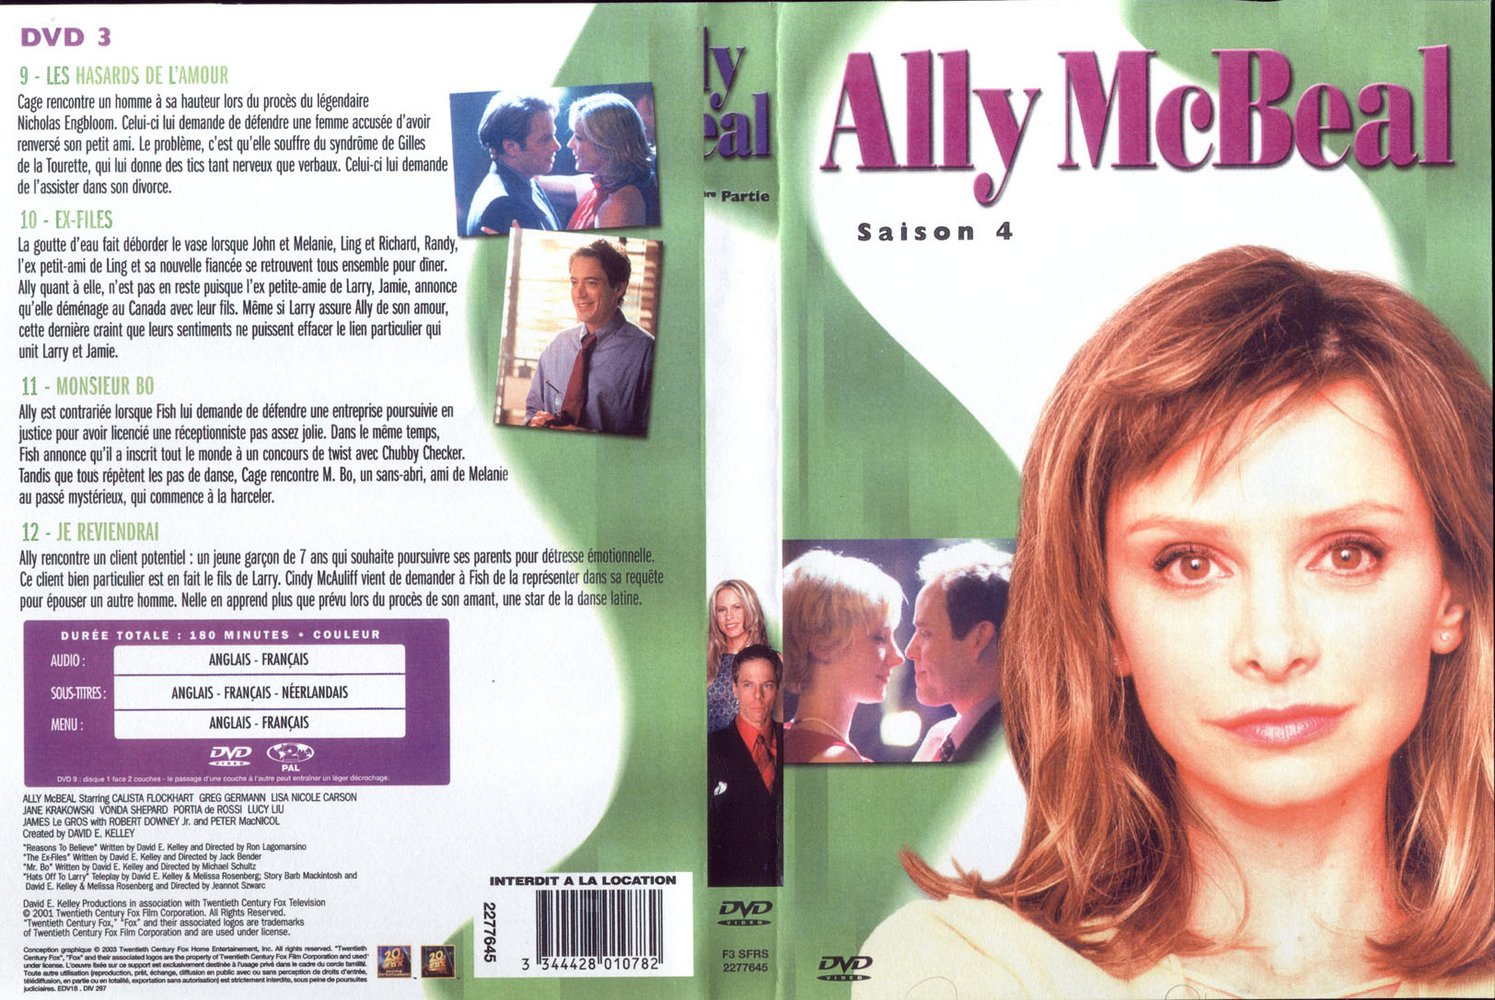 Jaquette DVD Ally McBeal saison 4 dvd 3